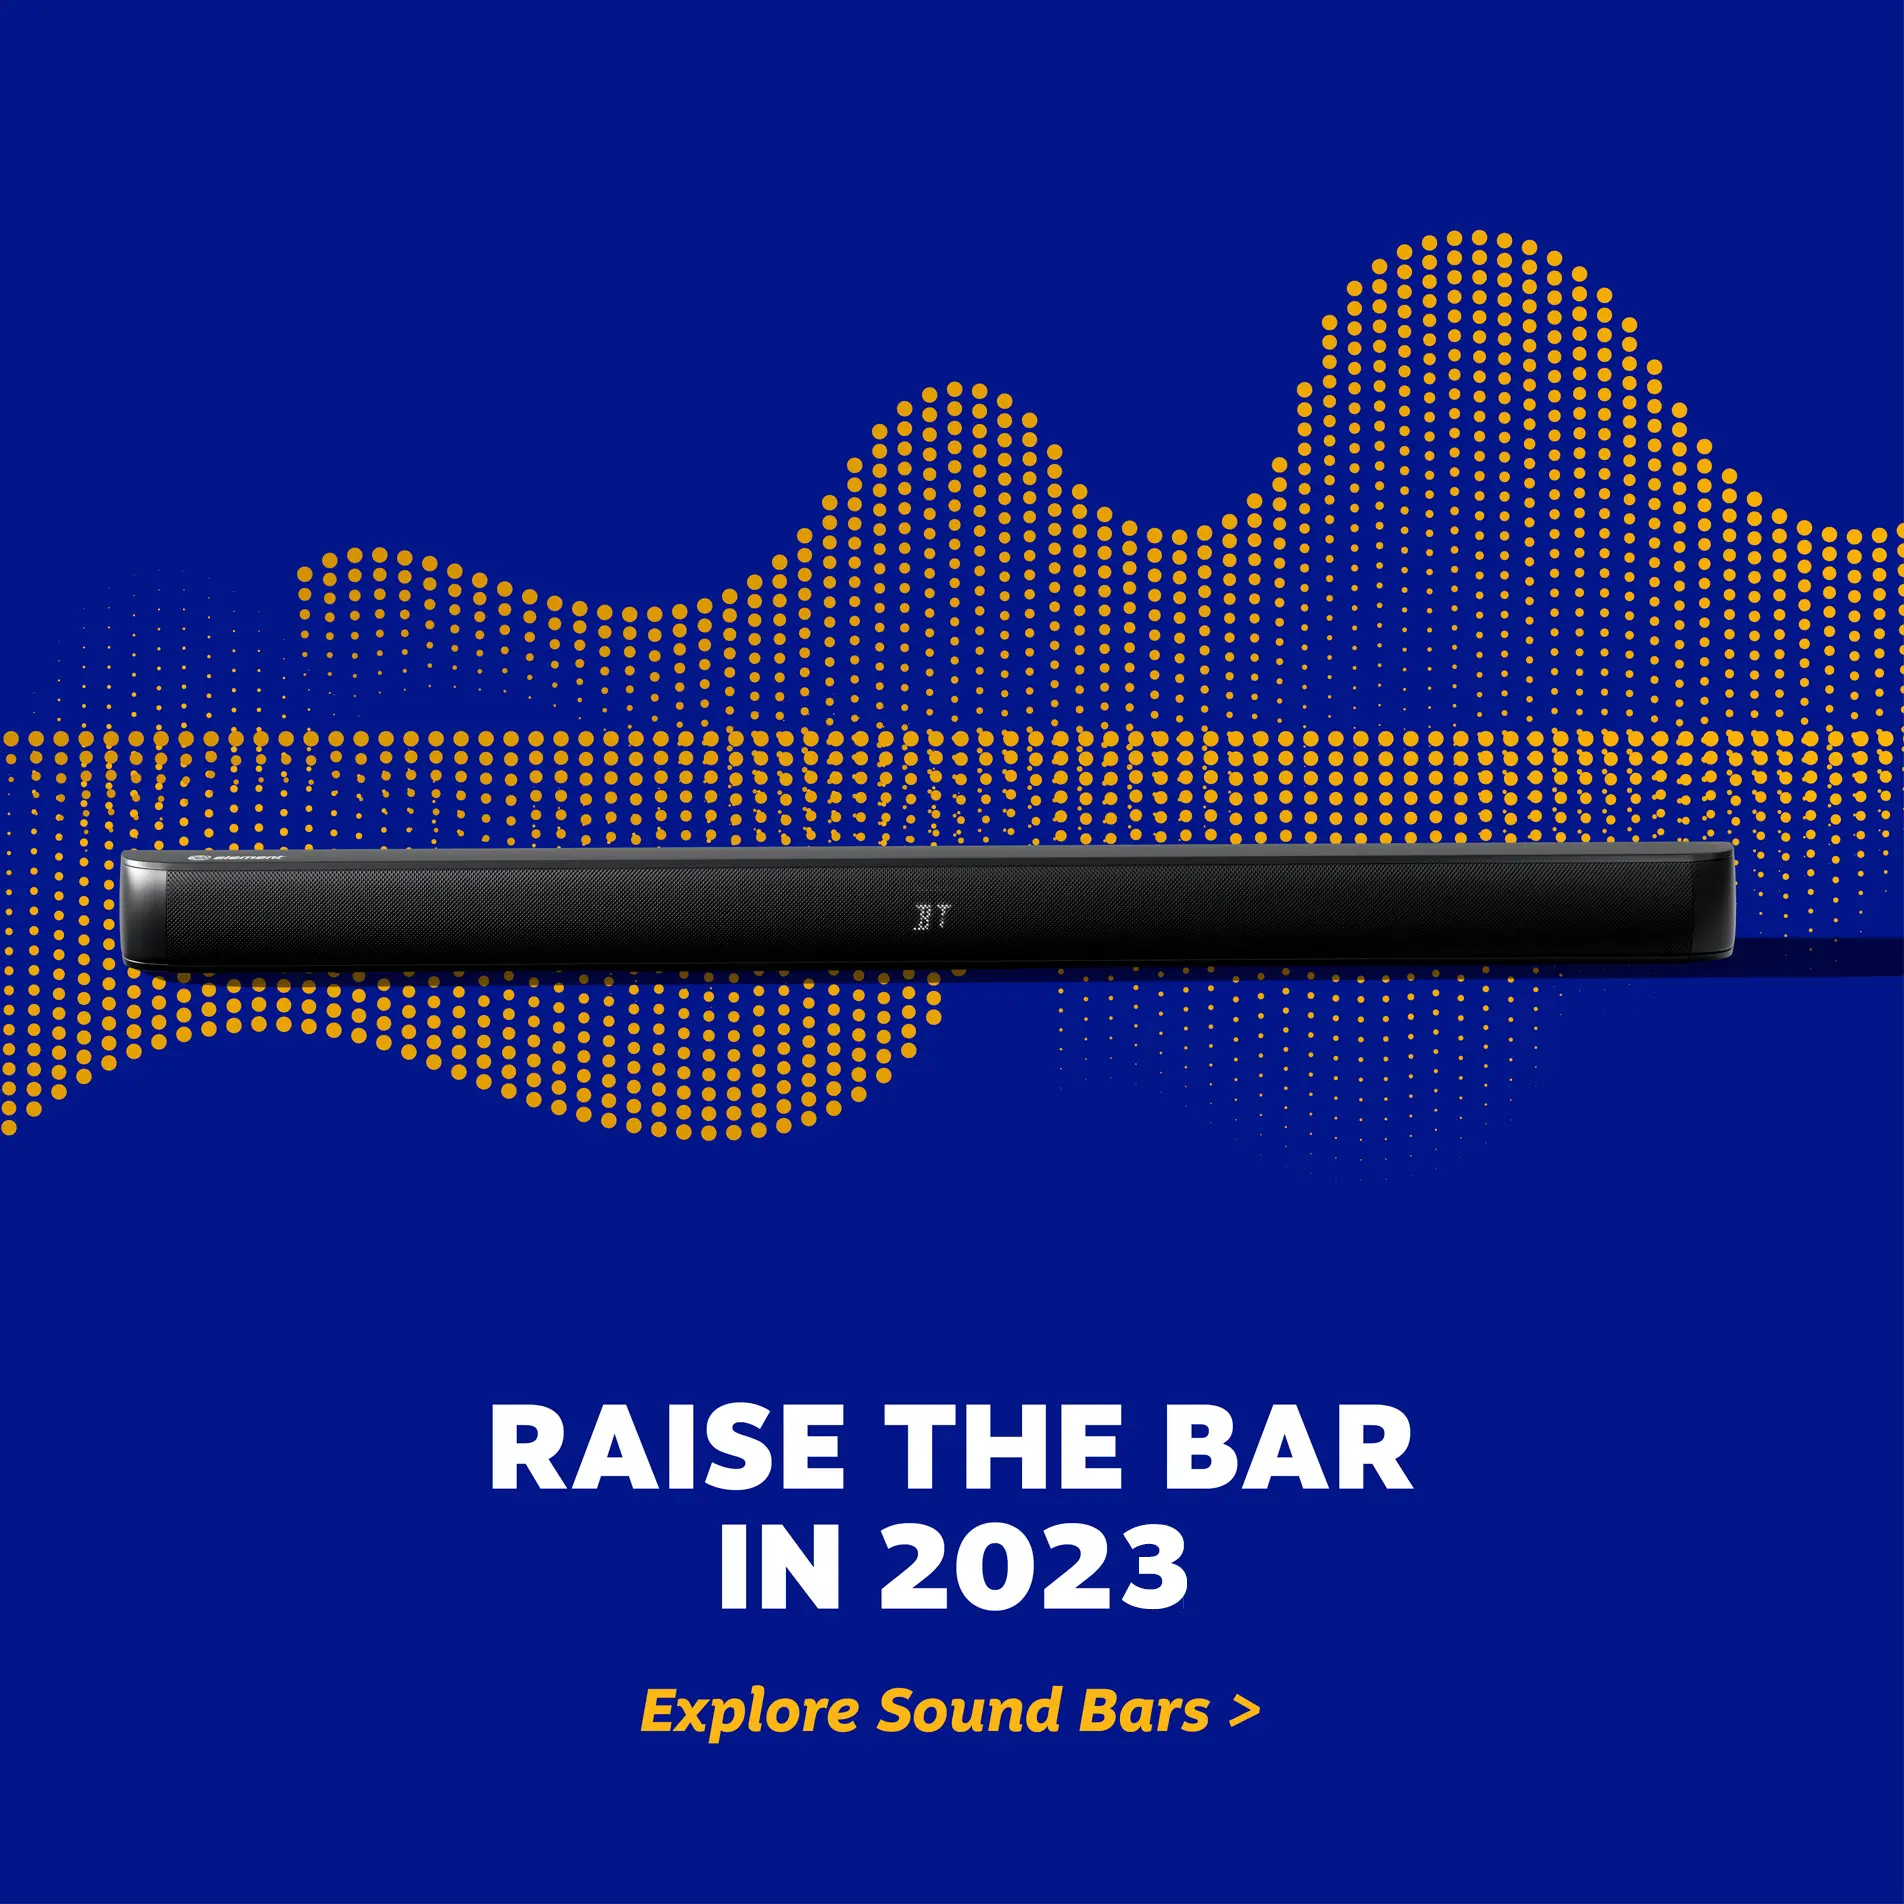 Raise the bar in 2023 - explore sound bars